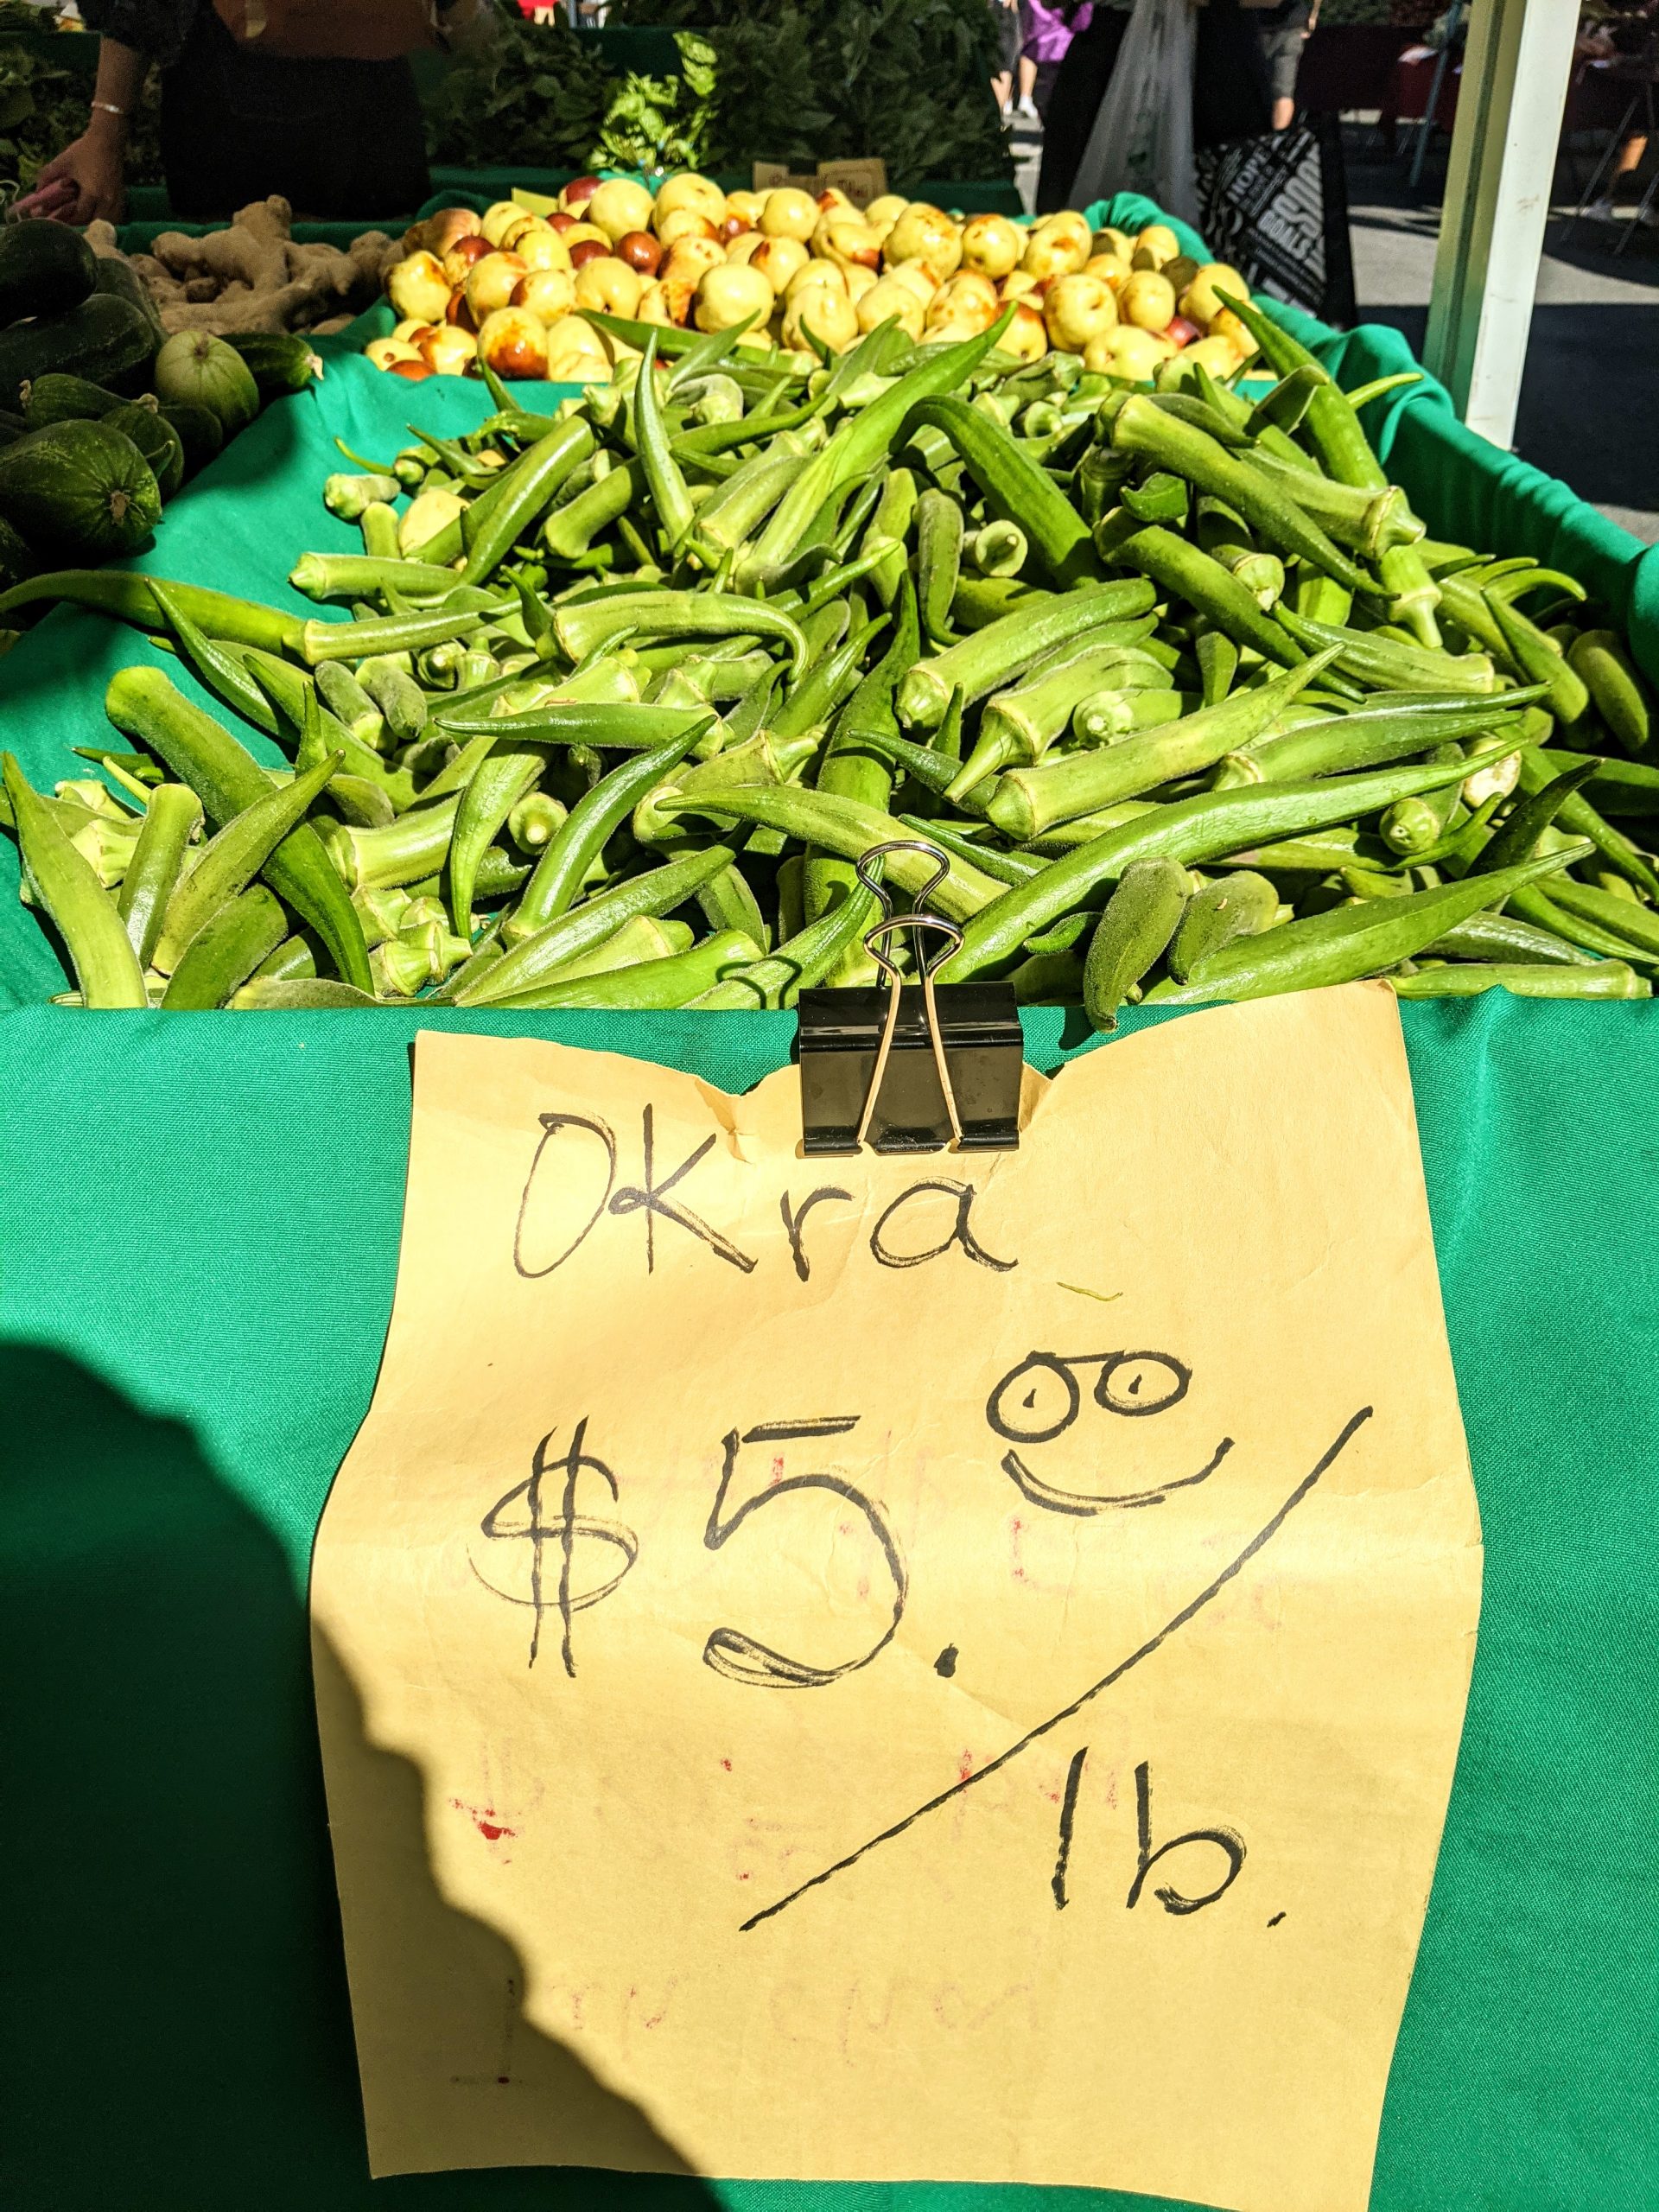 A bin of okra at the Fort Mason Farmers Market in San Francisco.